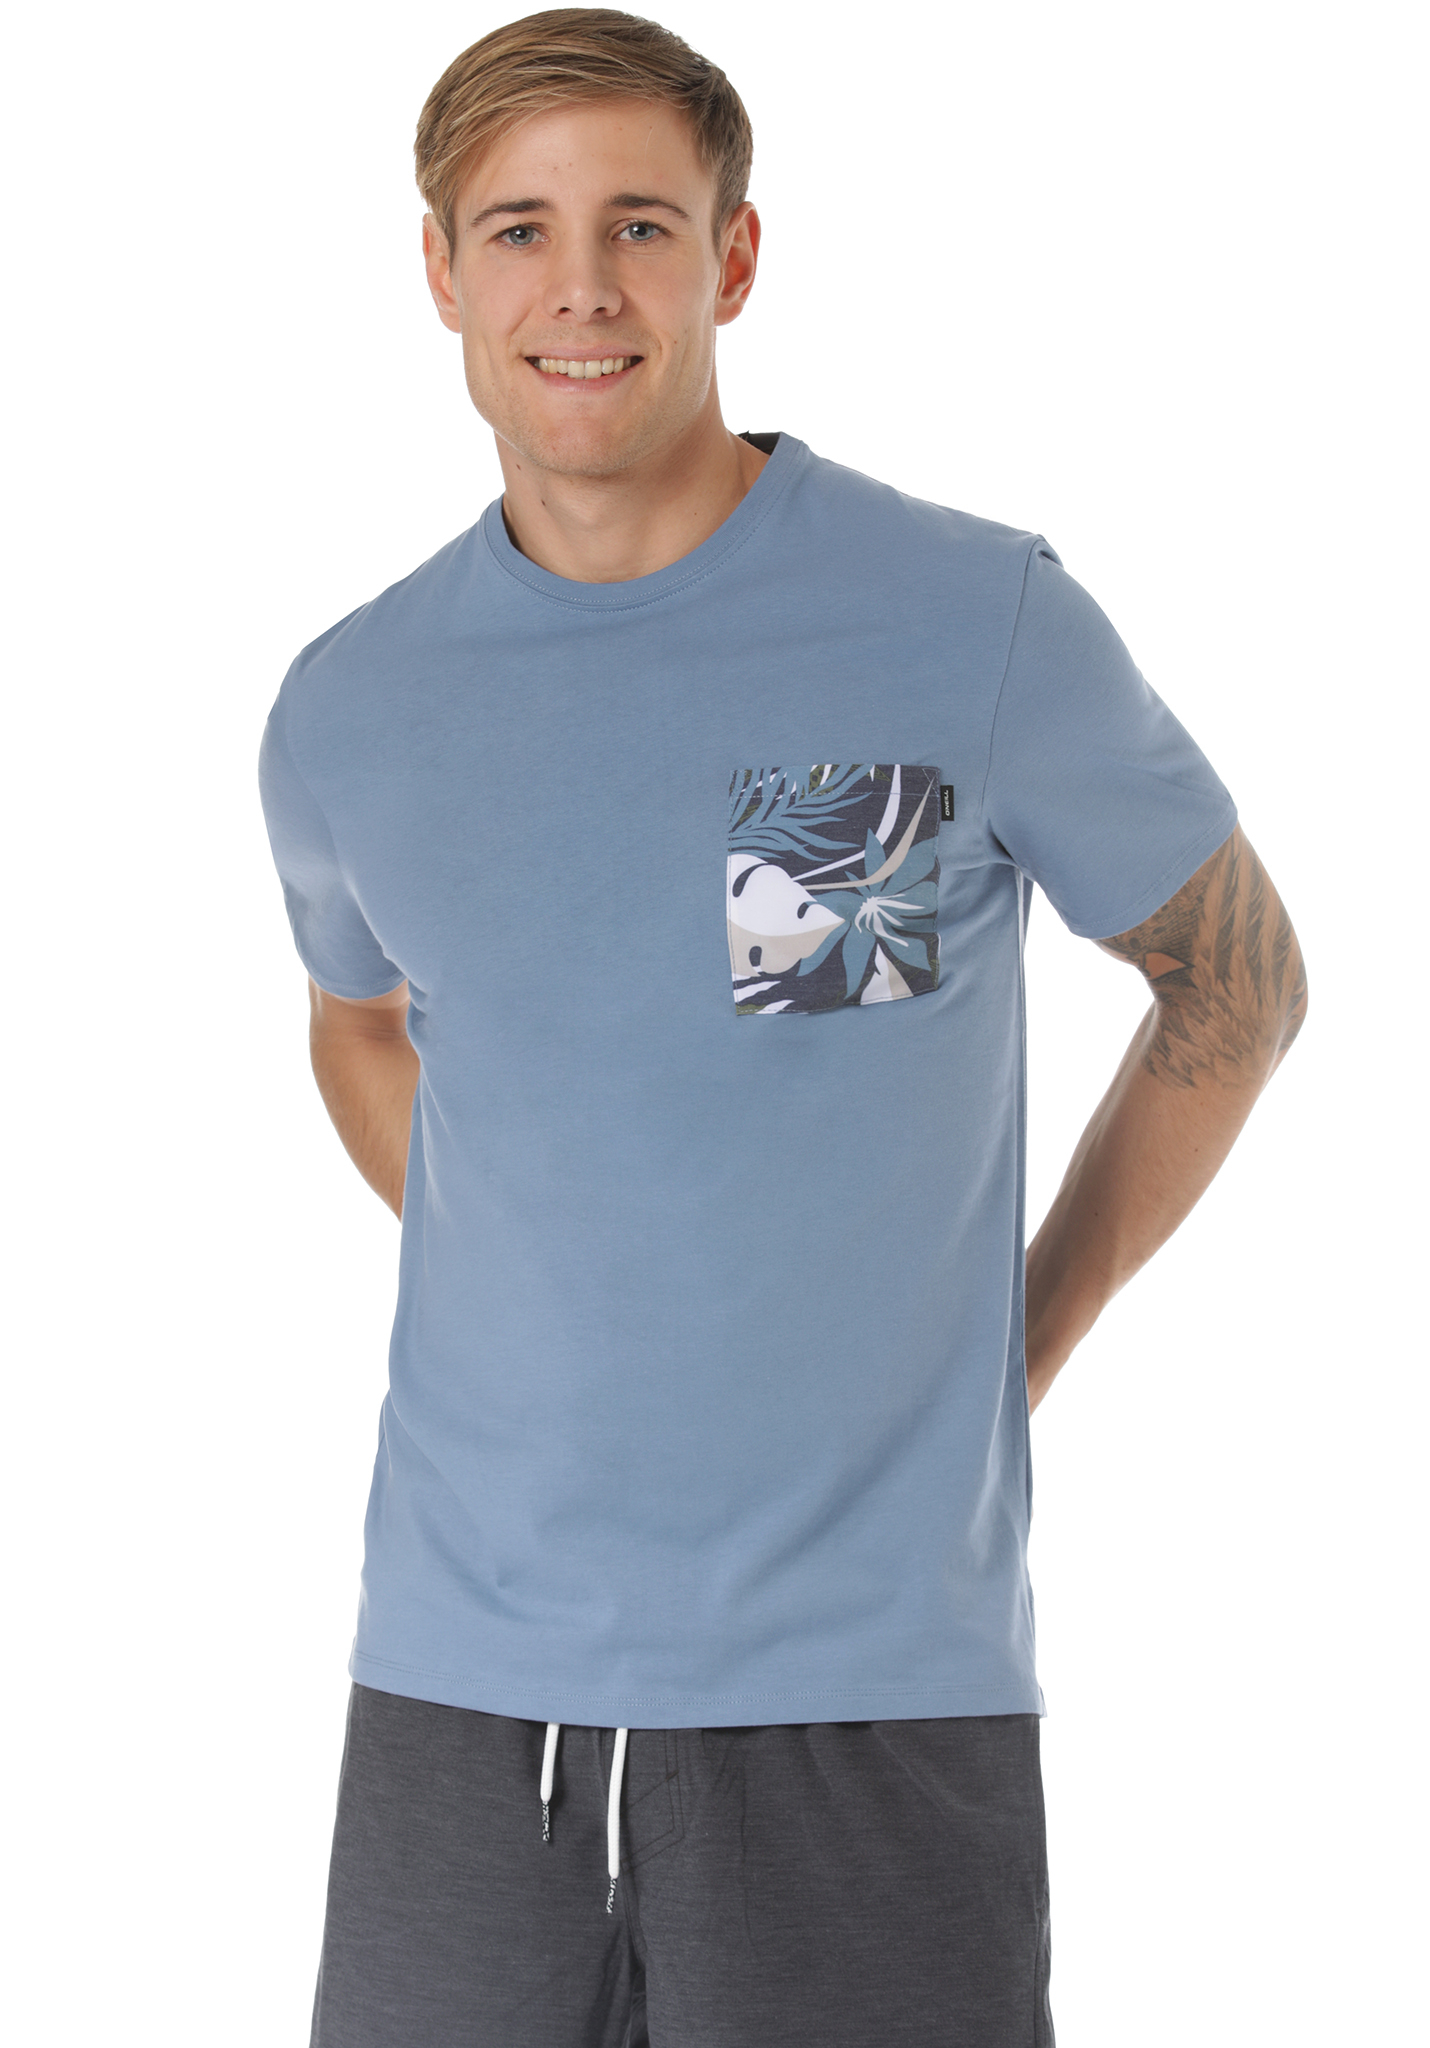 O'Neill Kohala T-Shirt walton blue XS